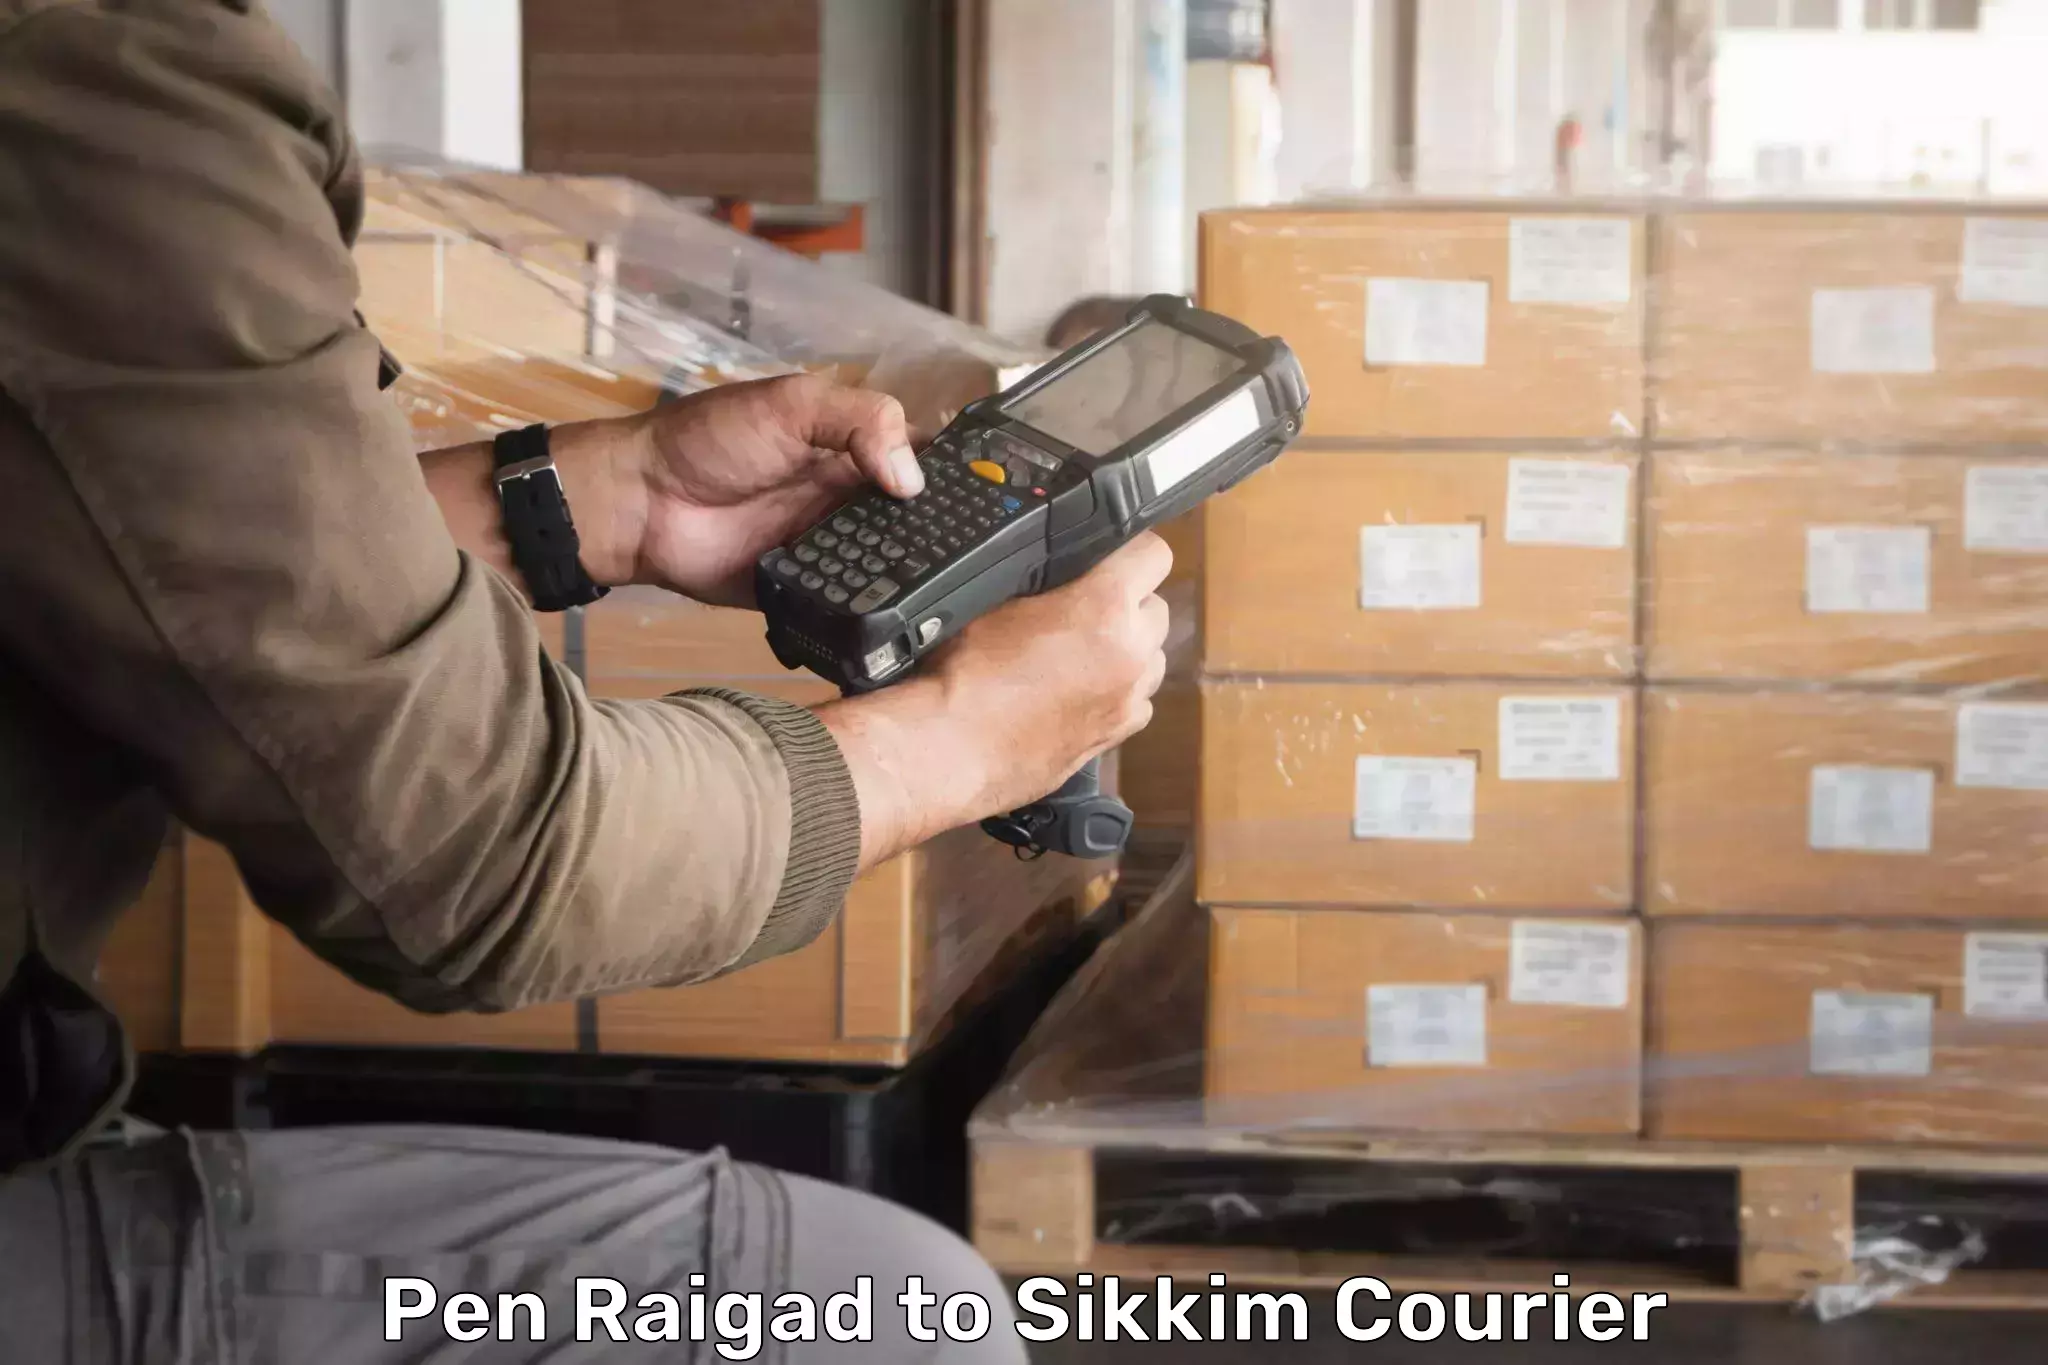 Efficient shipping platforms Pen Raigad to Pelling